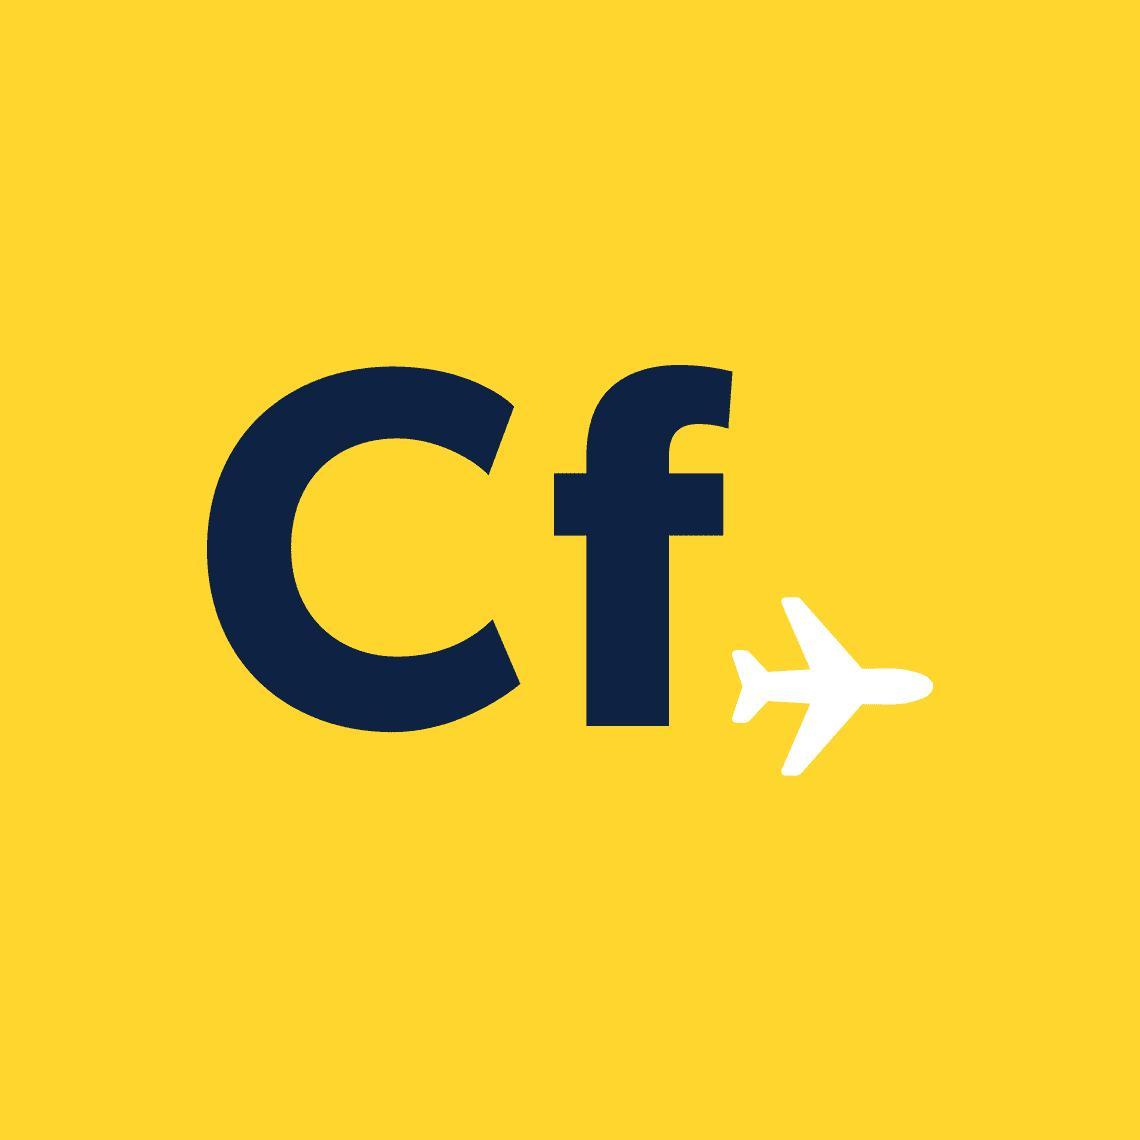 Ioannis Kapodistrias (CFU) Airport Guide | Terminals & Parking, Airport  Code, Car Rental & More Information